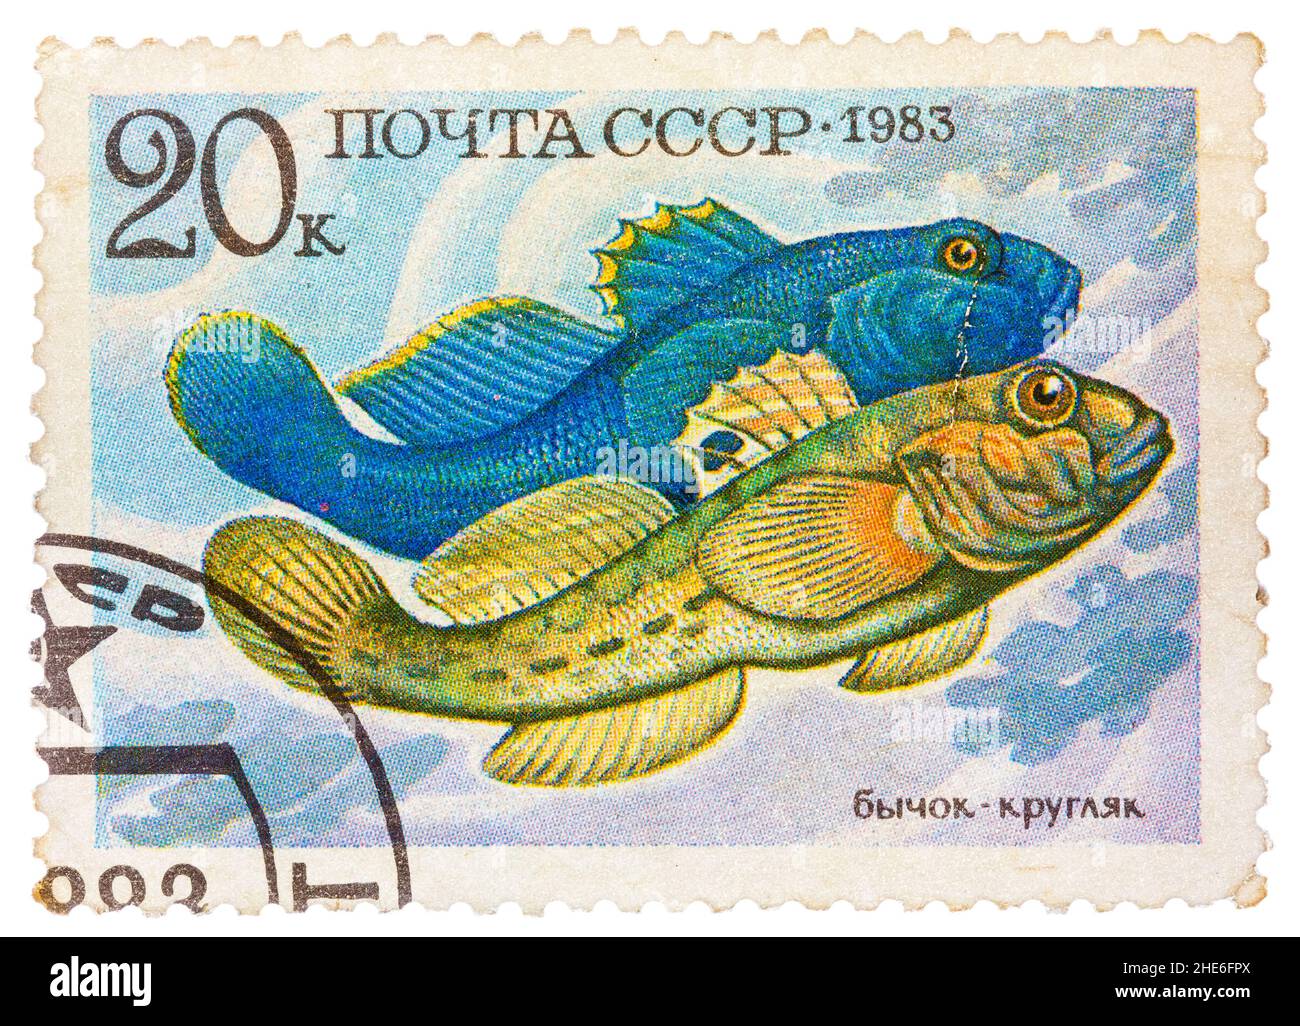 Stamp printed by Russia, shows fish, Neogobius fluviailis Stock Photo